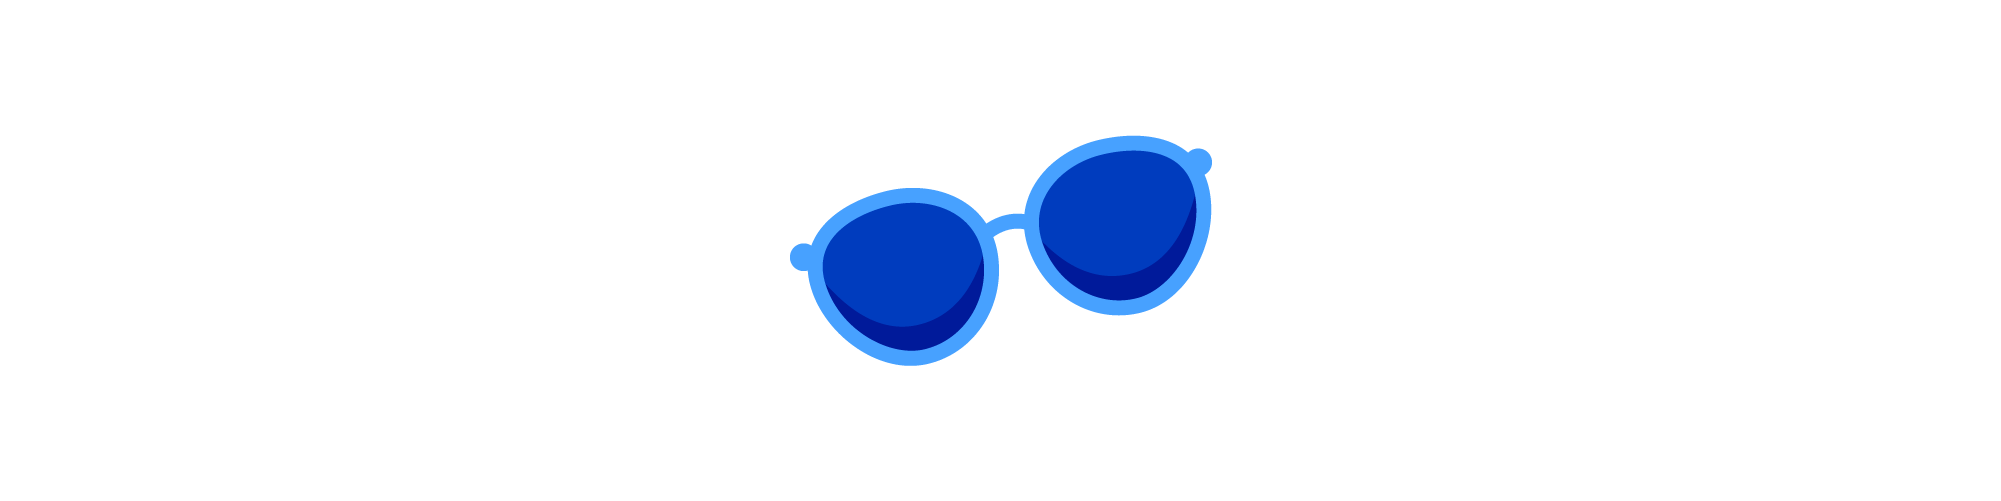 Illustrated icon of sunglasses